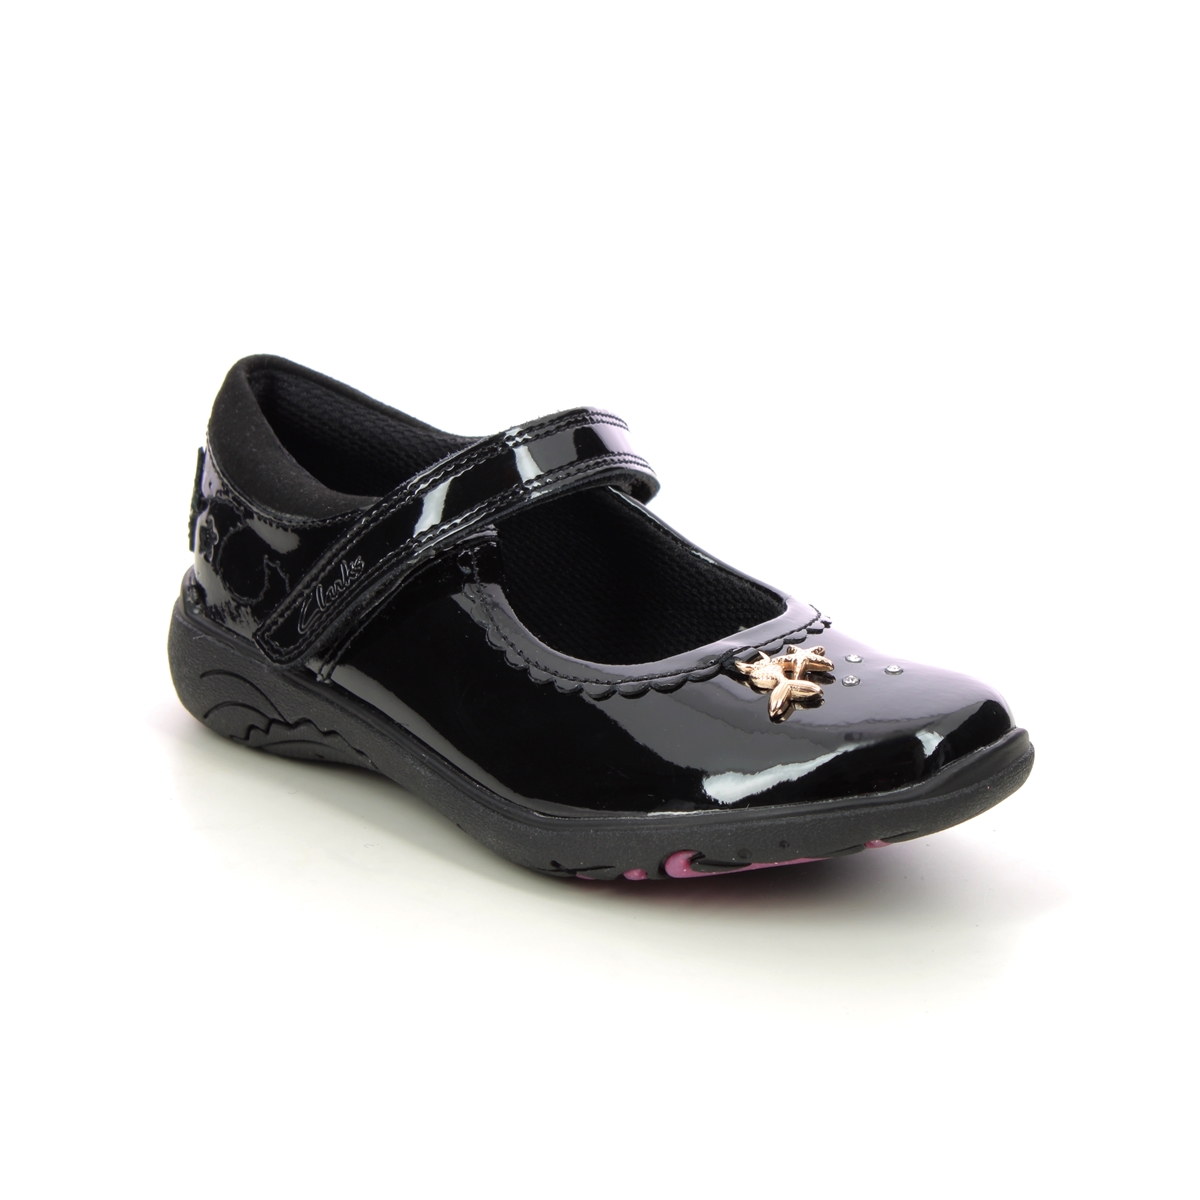 Clarks Relda Sea K Mary Jane Black Patent Kids Girls School Shoes 722415E In Size 1 In Plain Black Patent E Width Fitting Narrow Fit For School For ki